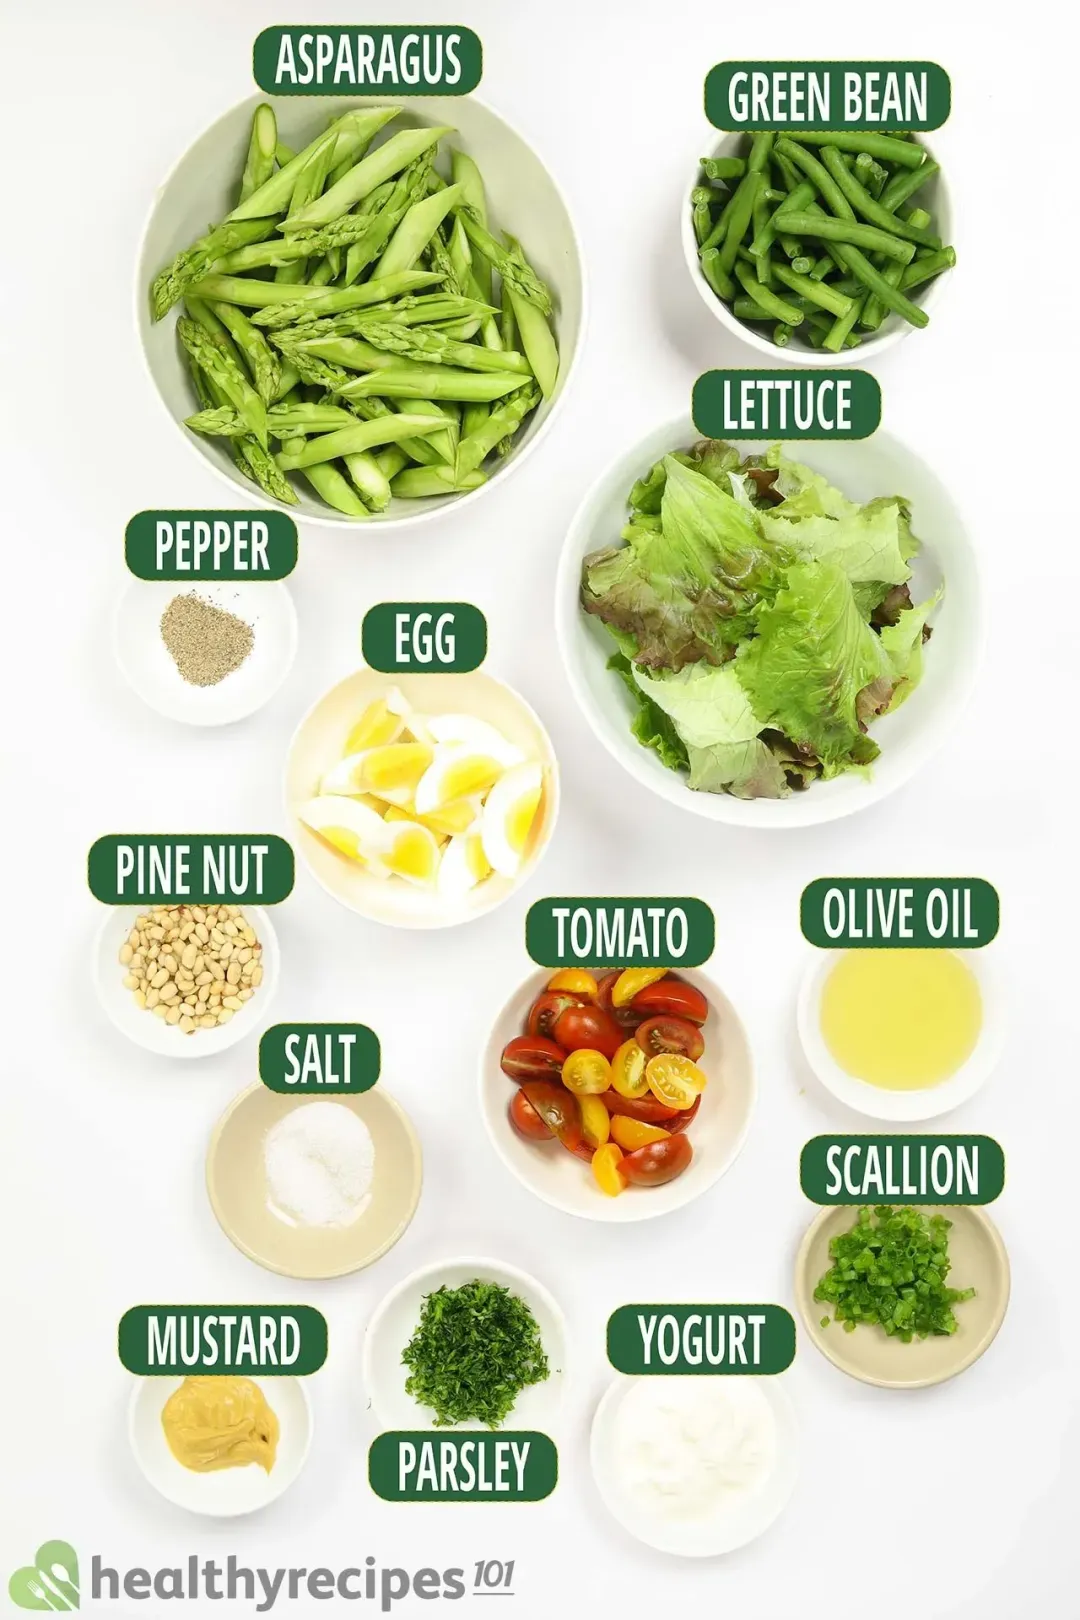 Ingredients for Asparagus Salad